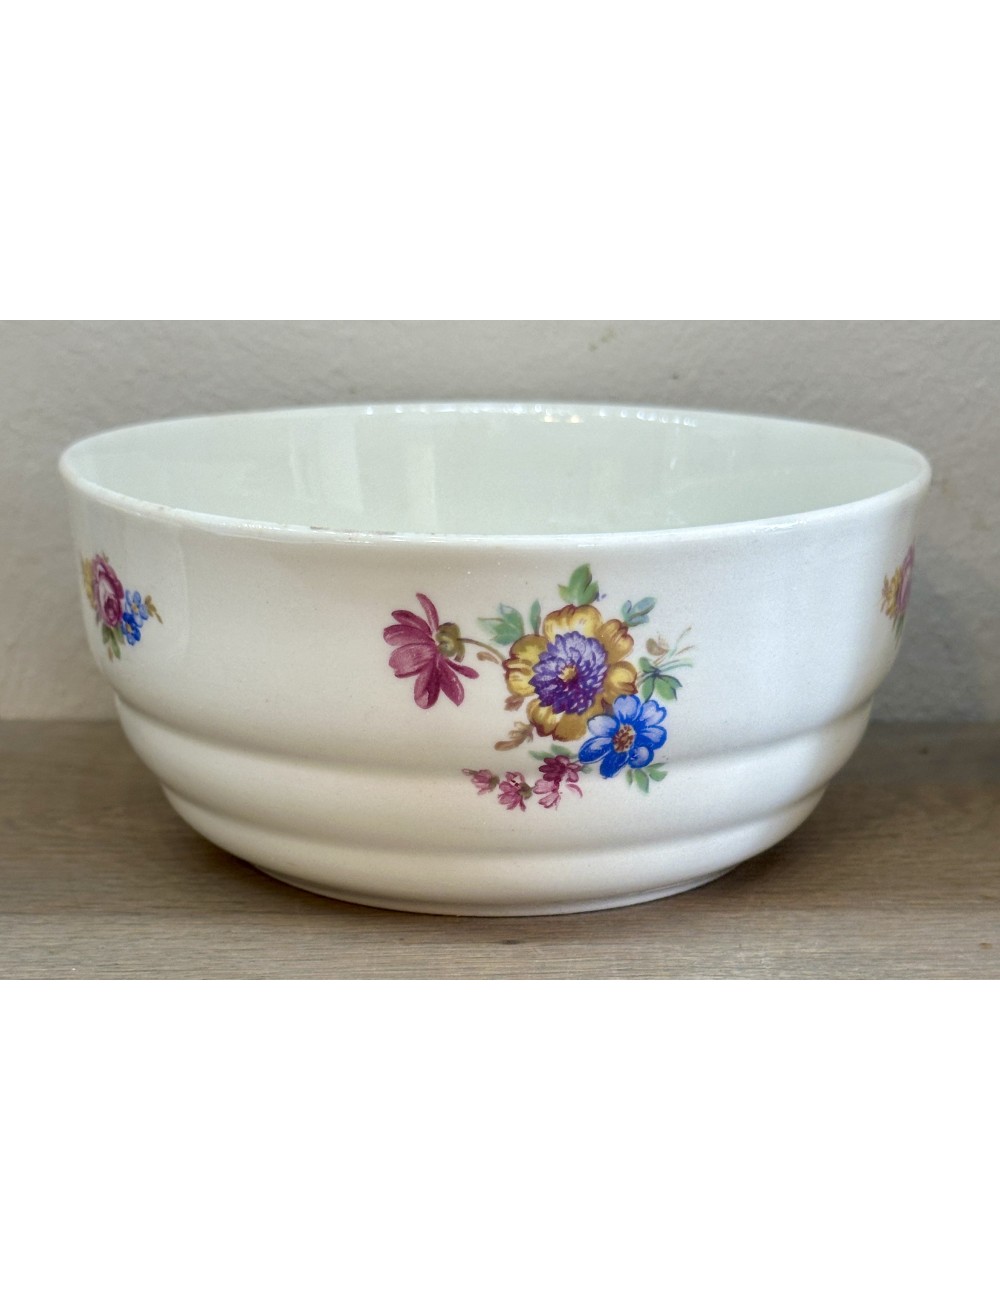 Nesting bowl - smaller model - Petrus Regout - model BOUDEWIJN with décor of multicolored flowers (PIOENROOS)